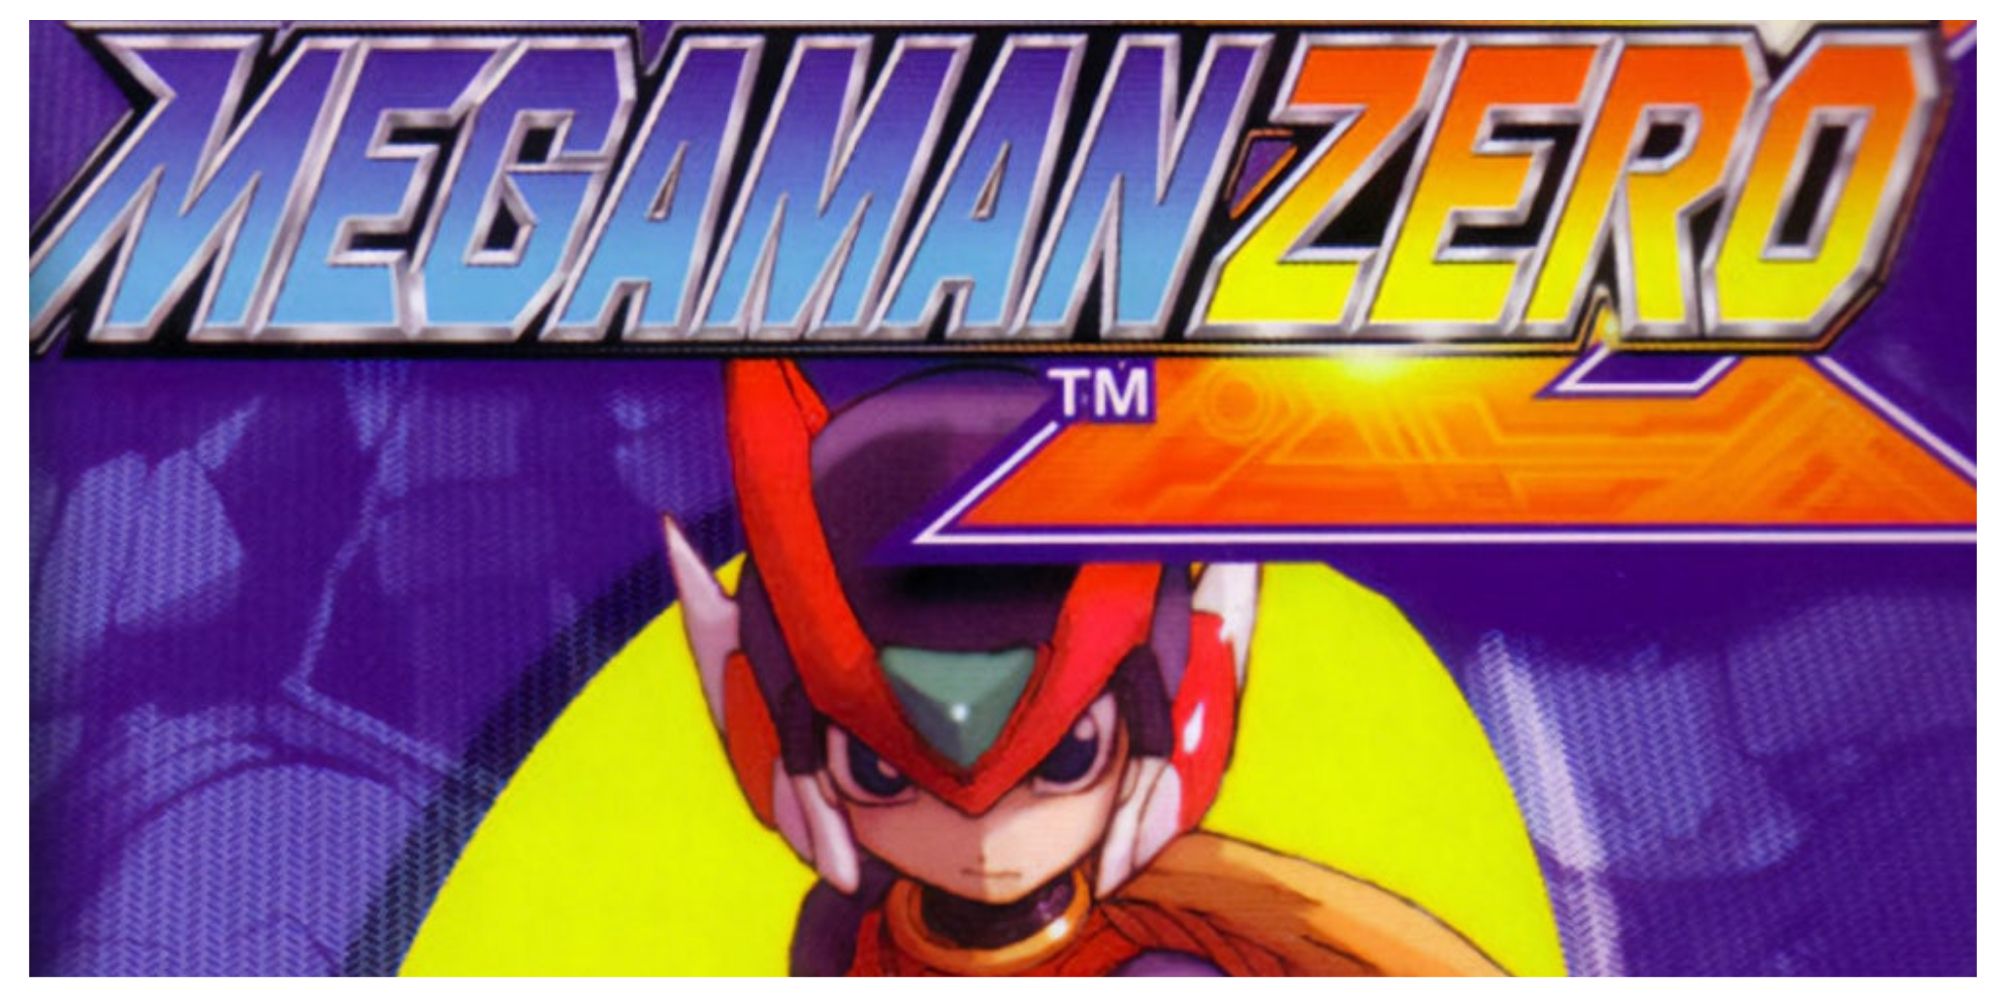 Mega Man Zero Cover Game Boy Advance